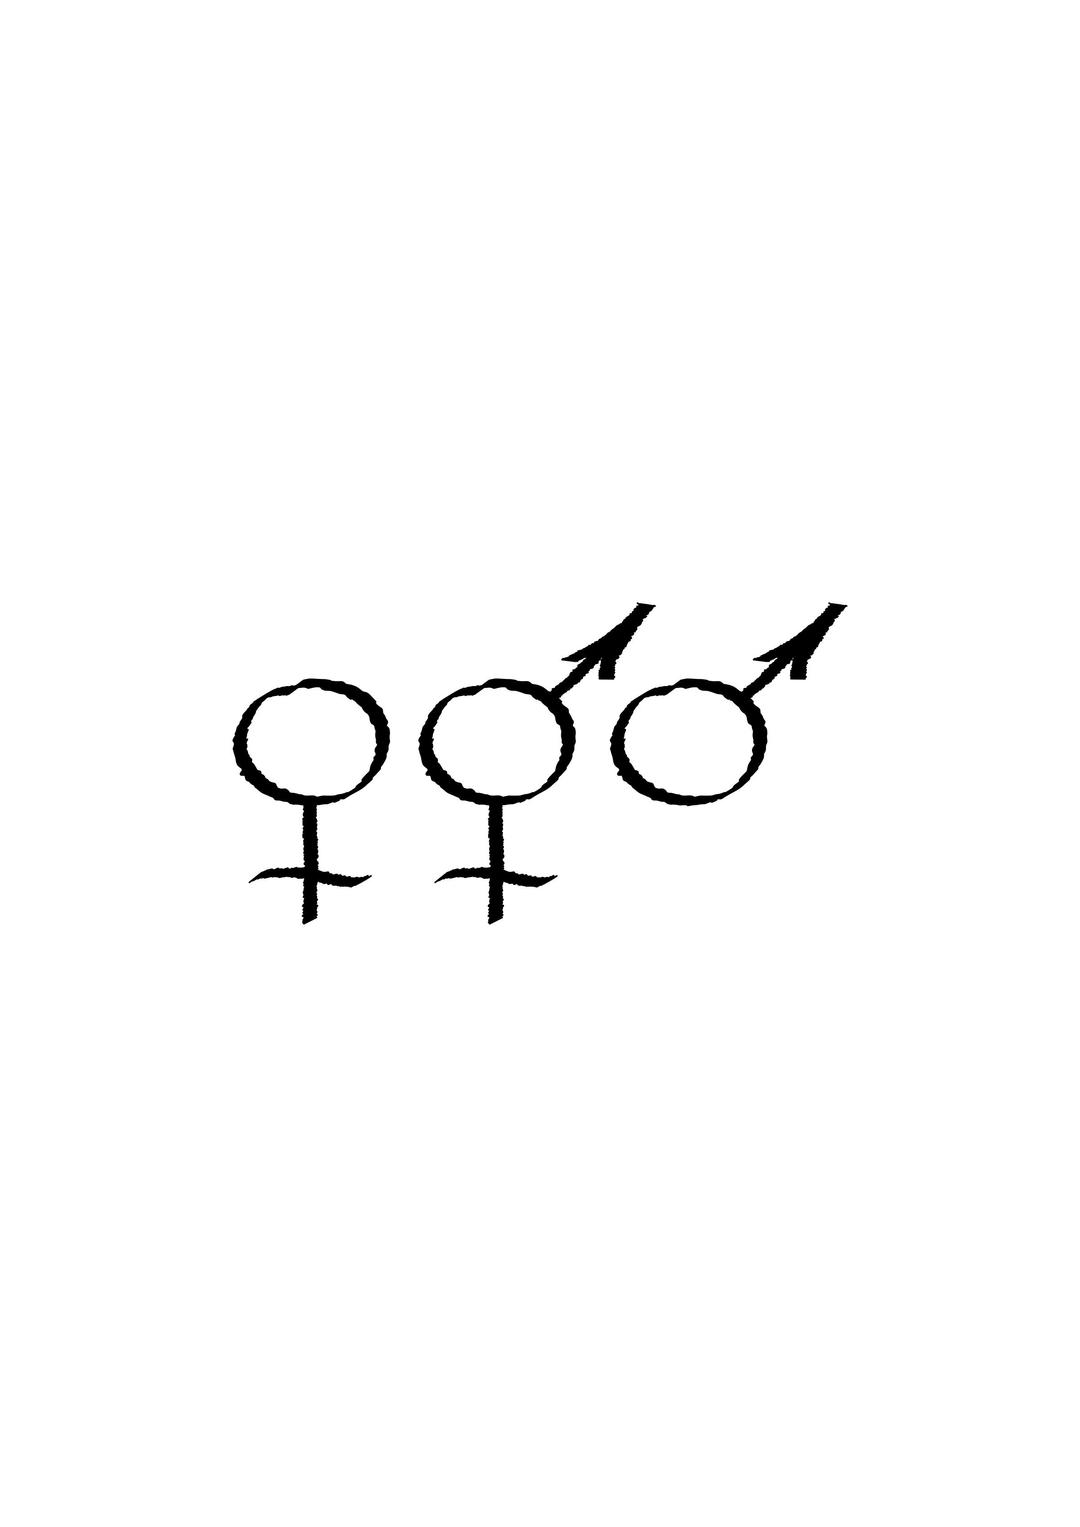 Female / Male Symbols png transparent